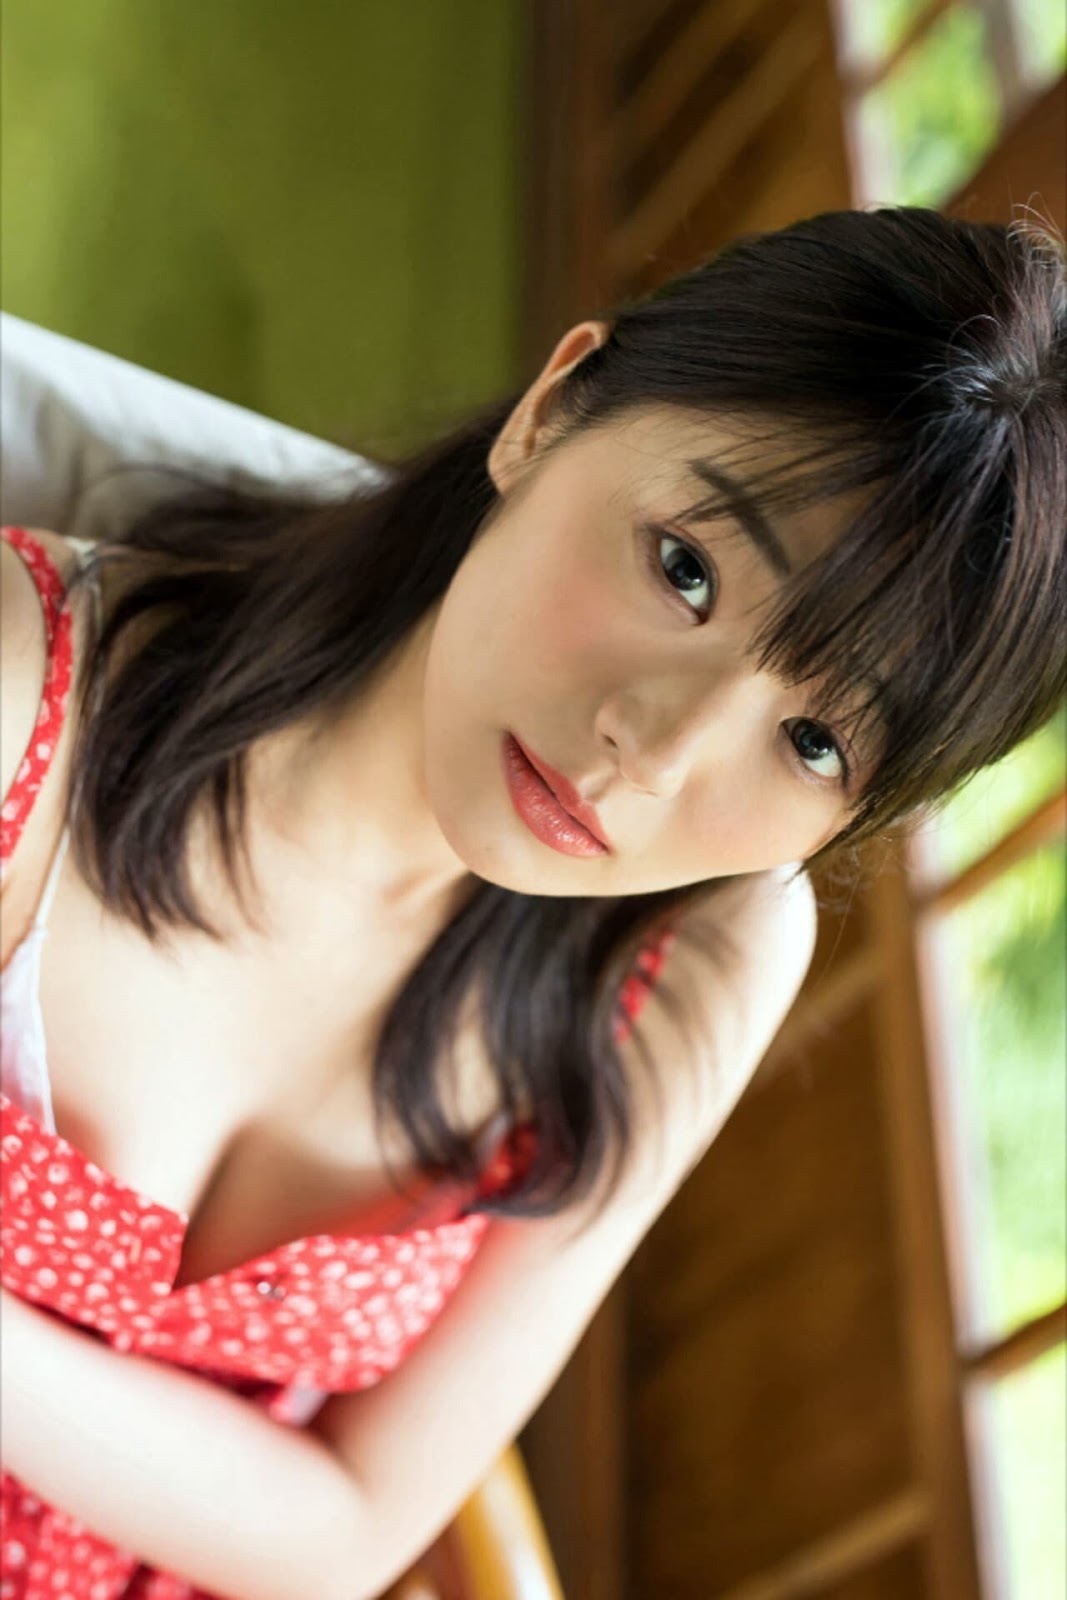 Kasumi Hasegawa, who has great hips.